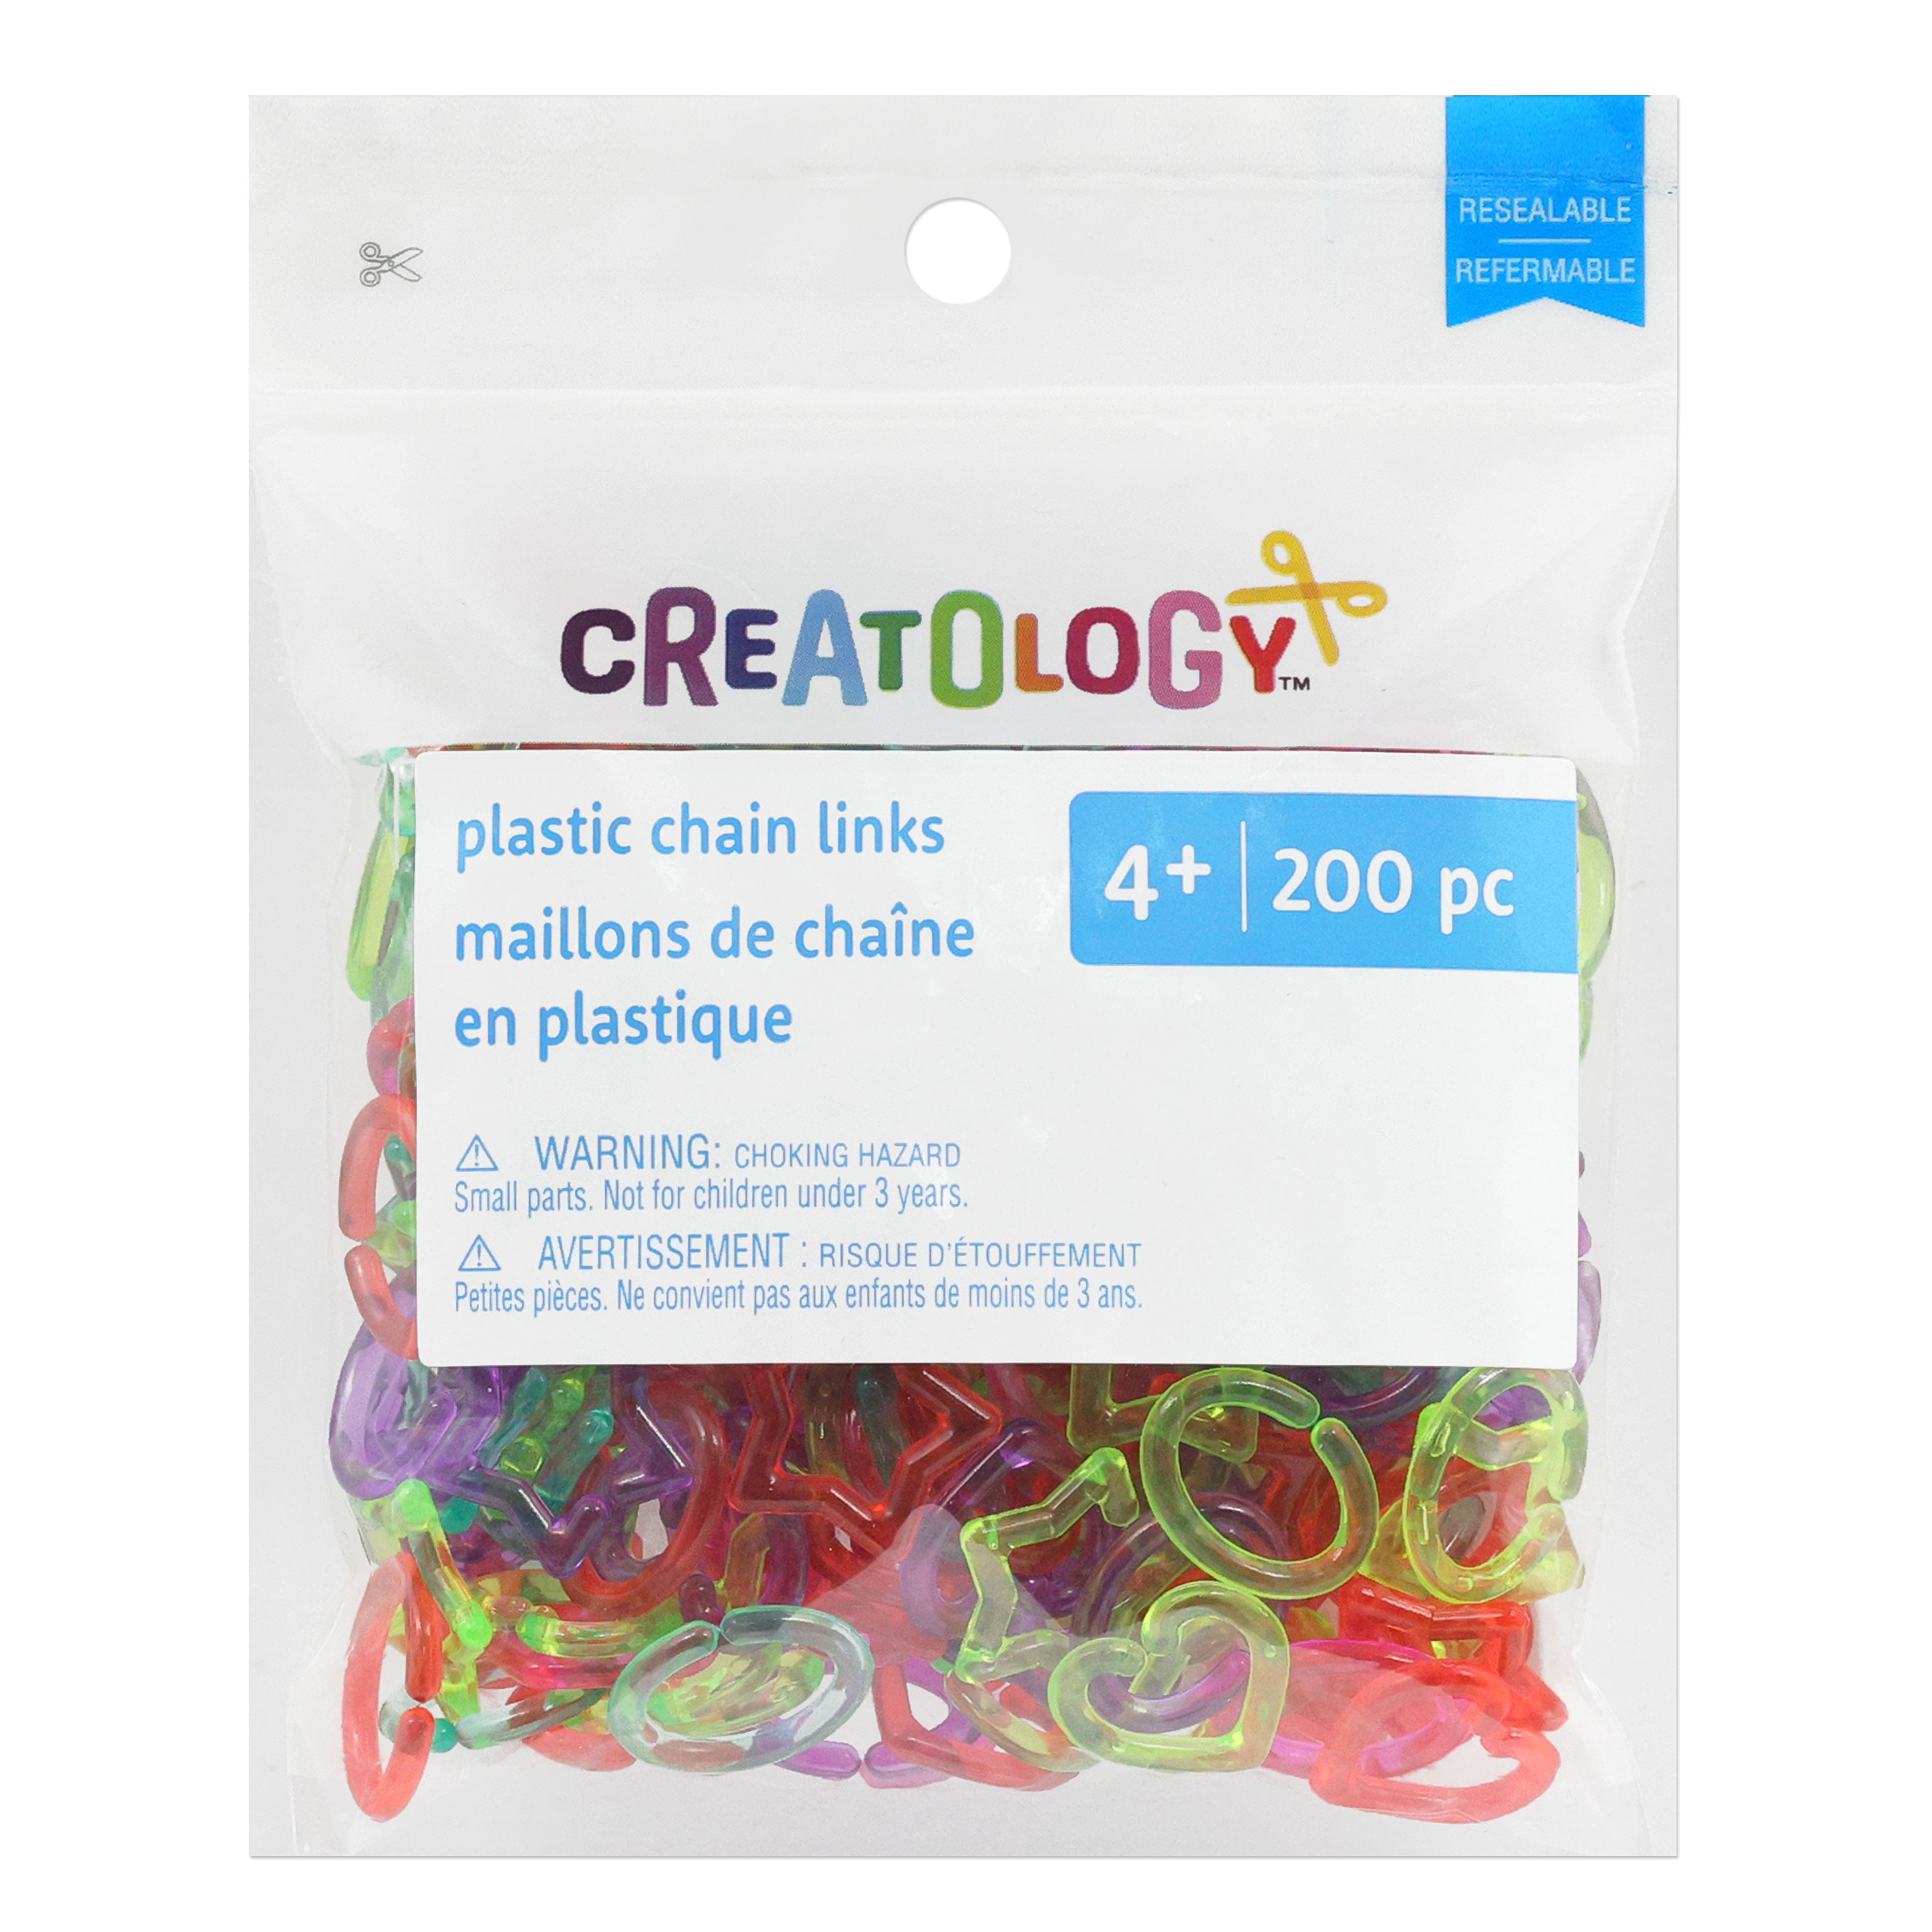 12 Packs: 200 ct. (2,400 total) Rainbow Heart, Star &#x26; Circle Chain Links by Creatology&#x2122;